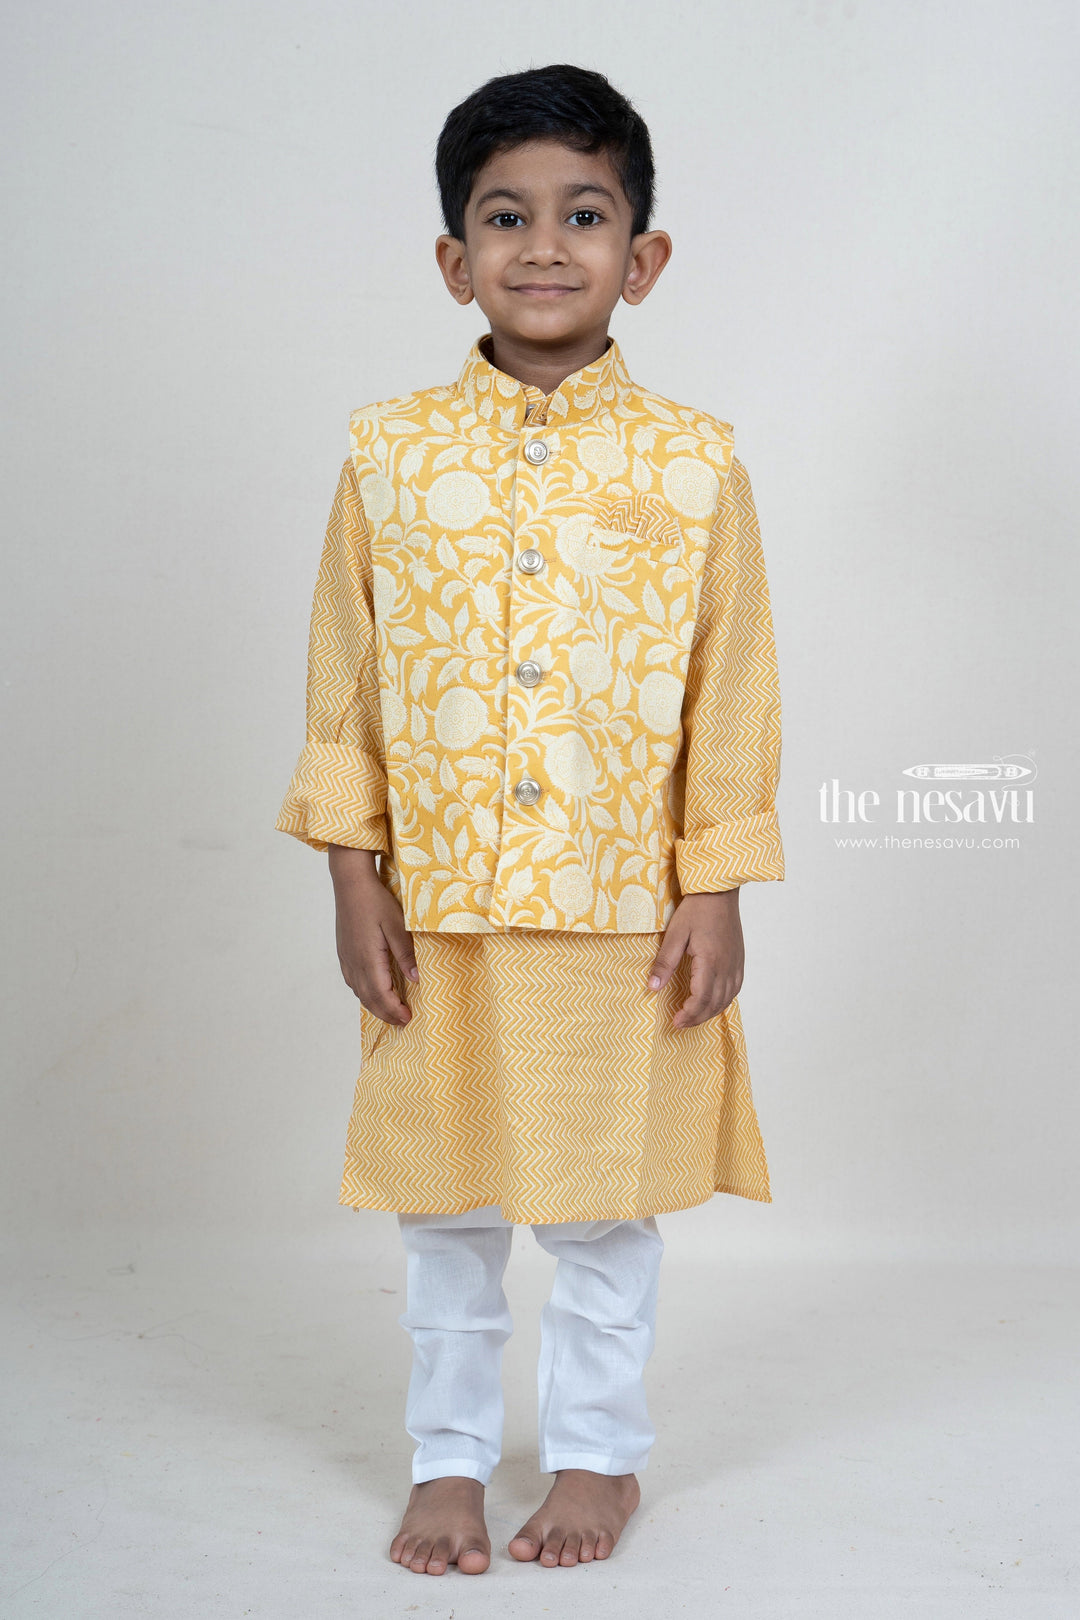 The Nesavu Ethnic Sets Pale Yellow Cotton Overcoat Attached Readymade Kurta Suit For Boys psr silks Nesavu